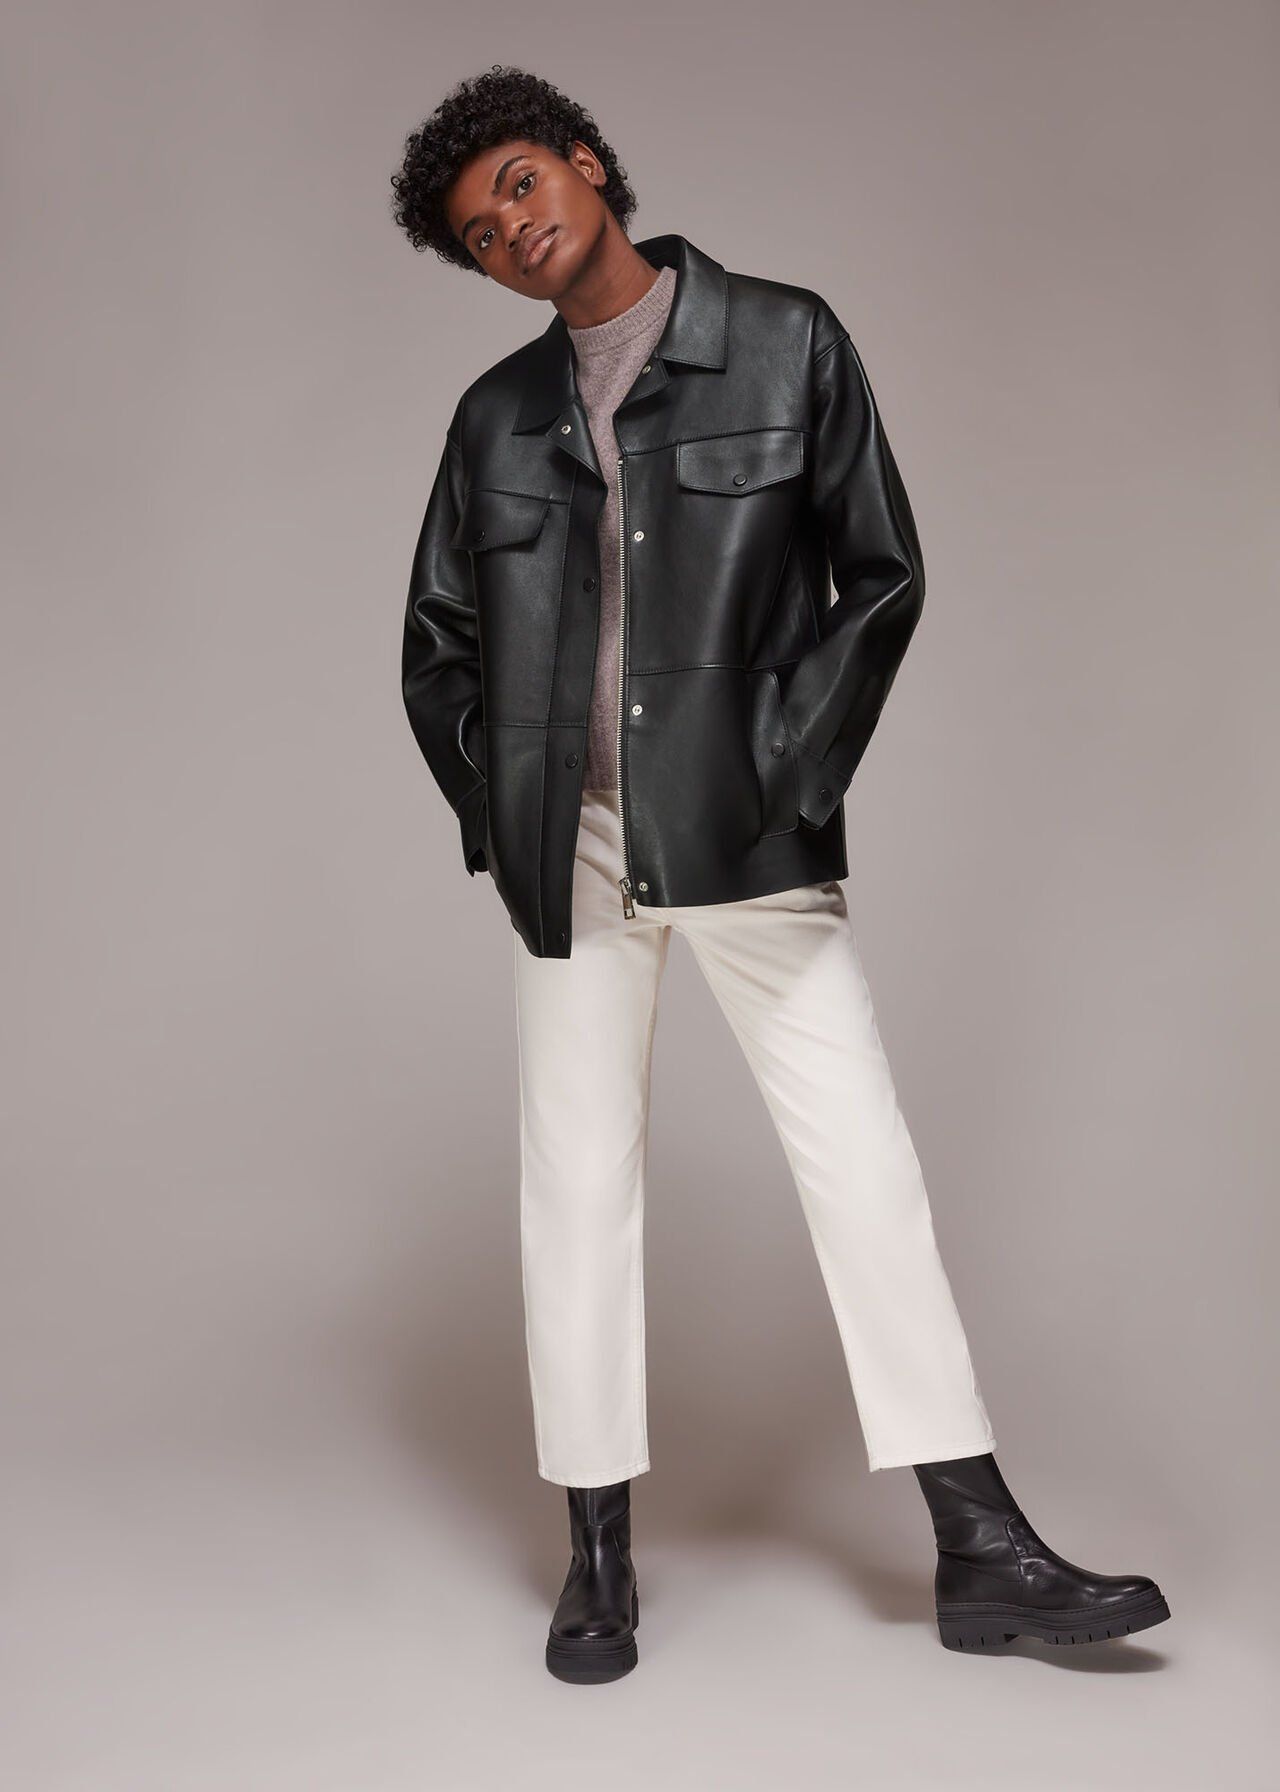 Buy Black, Leather Biker Jacket for men (S) at Amazon.in